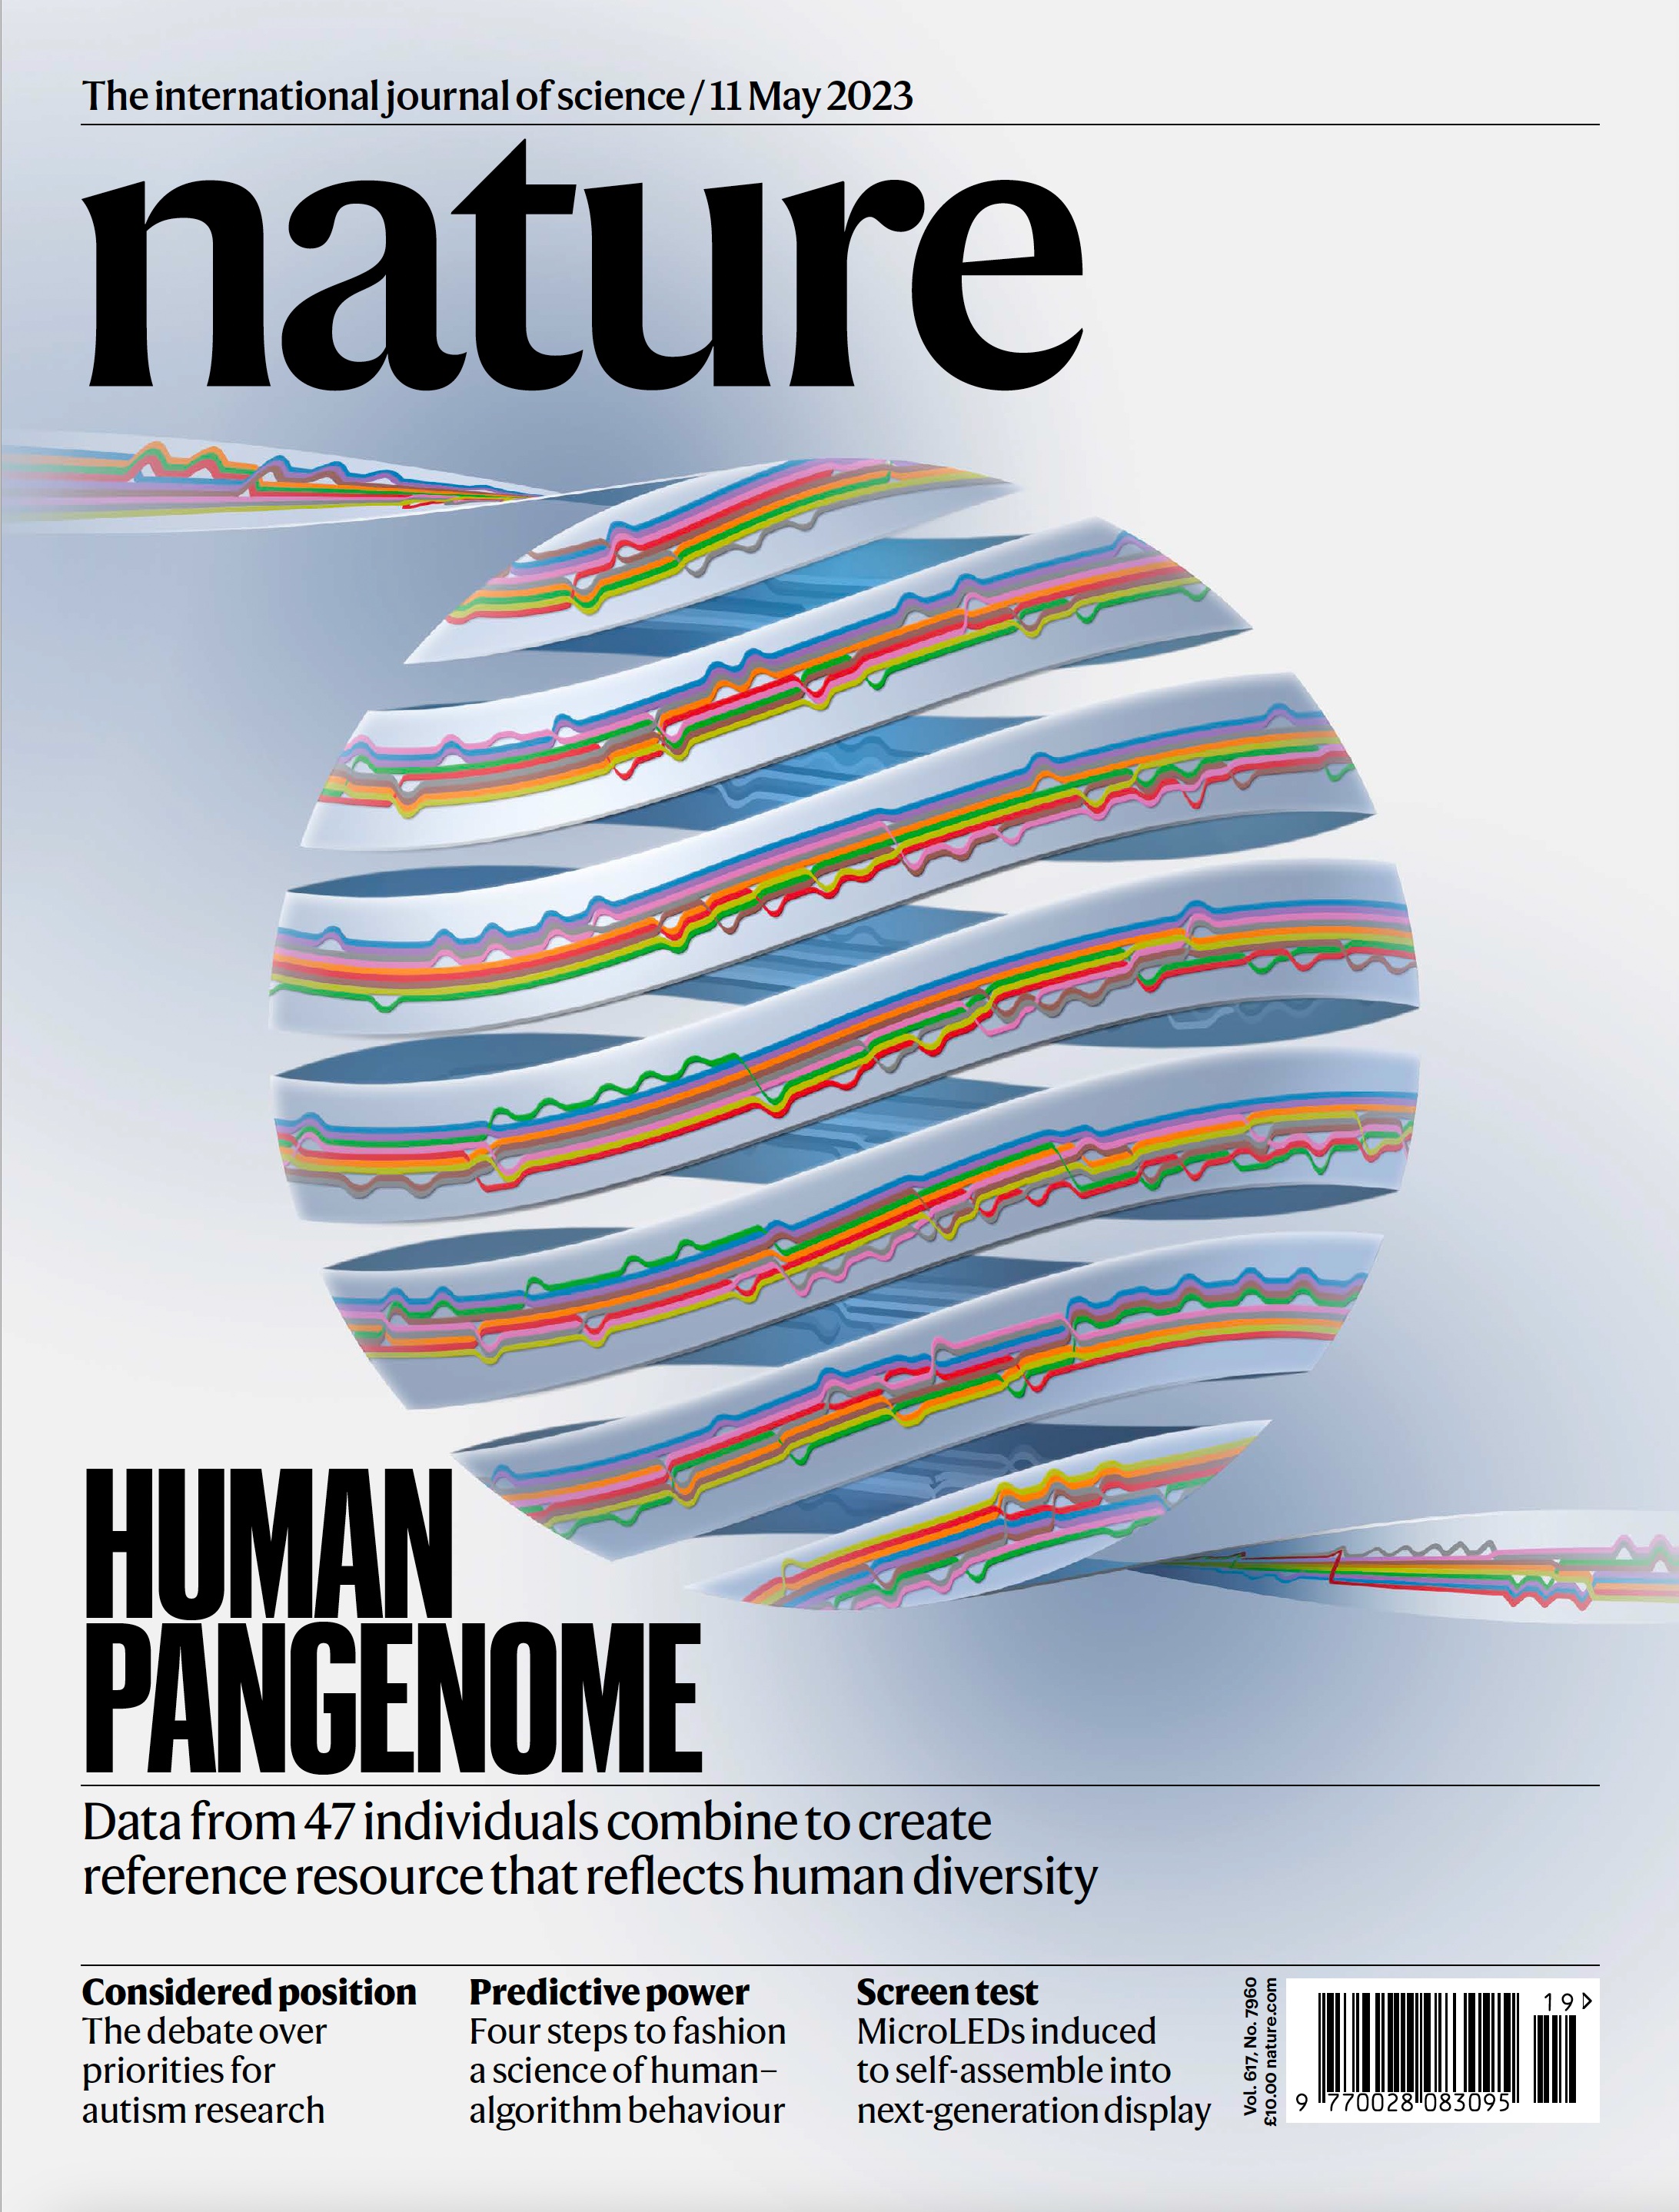 Human Pangenome Reference Consortium (@HumanPangenome) / Twitter